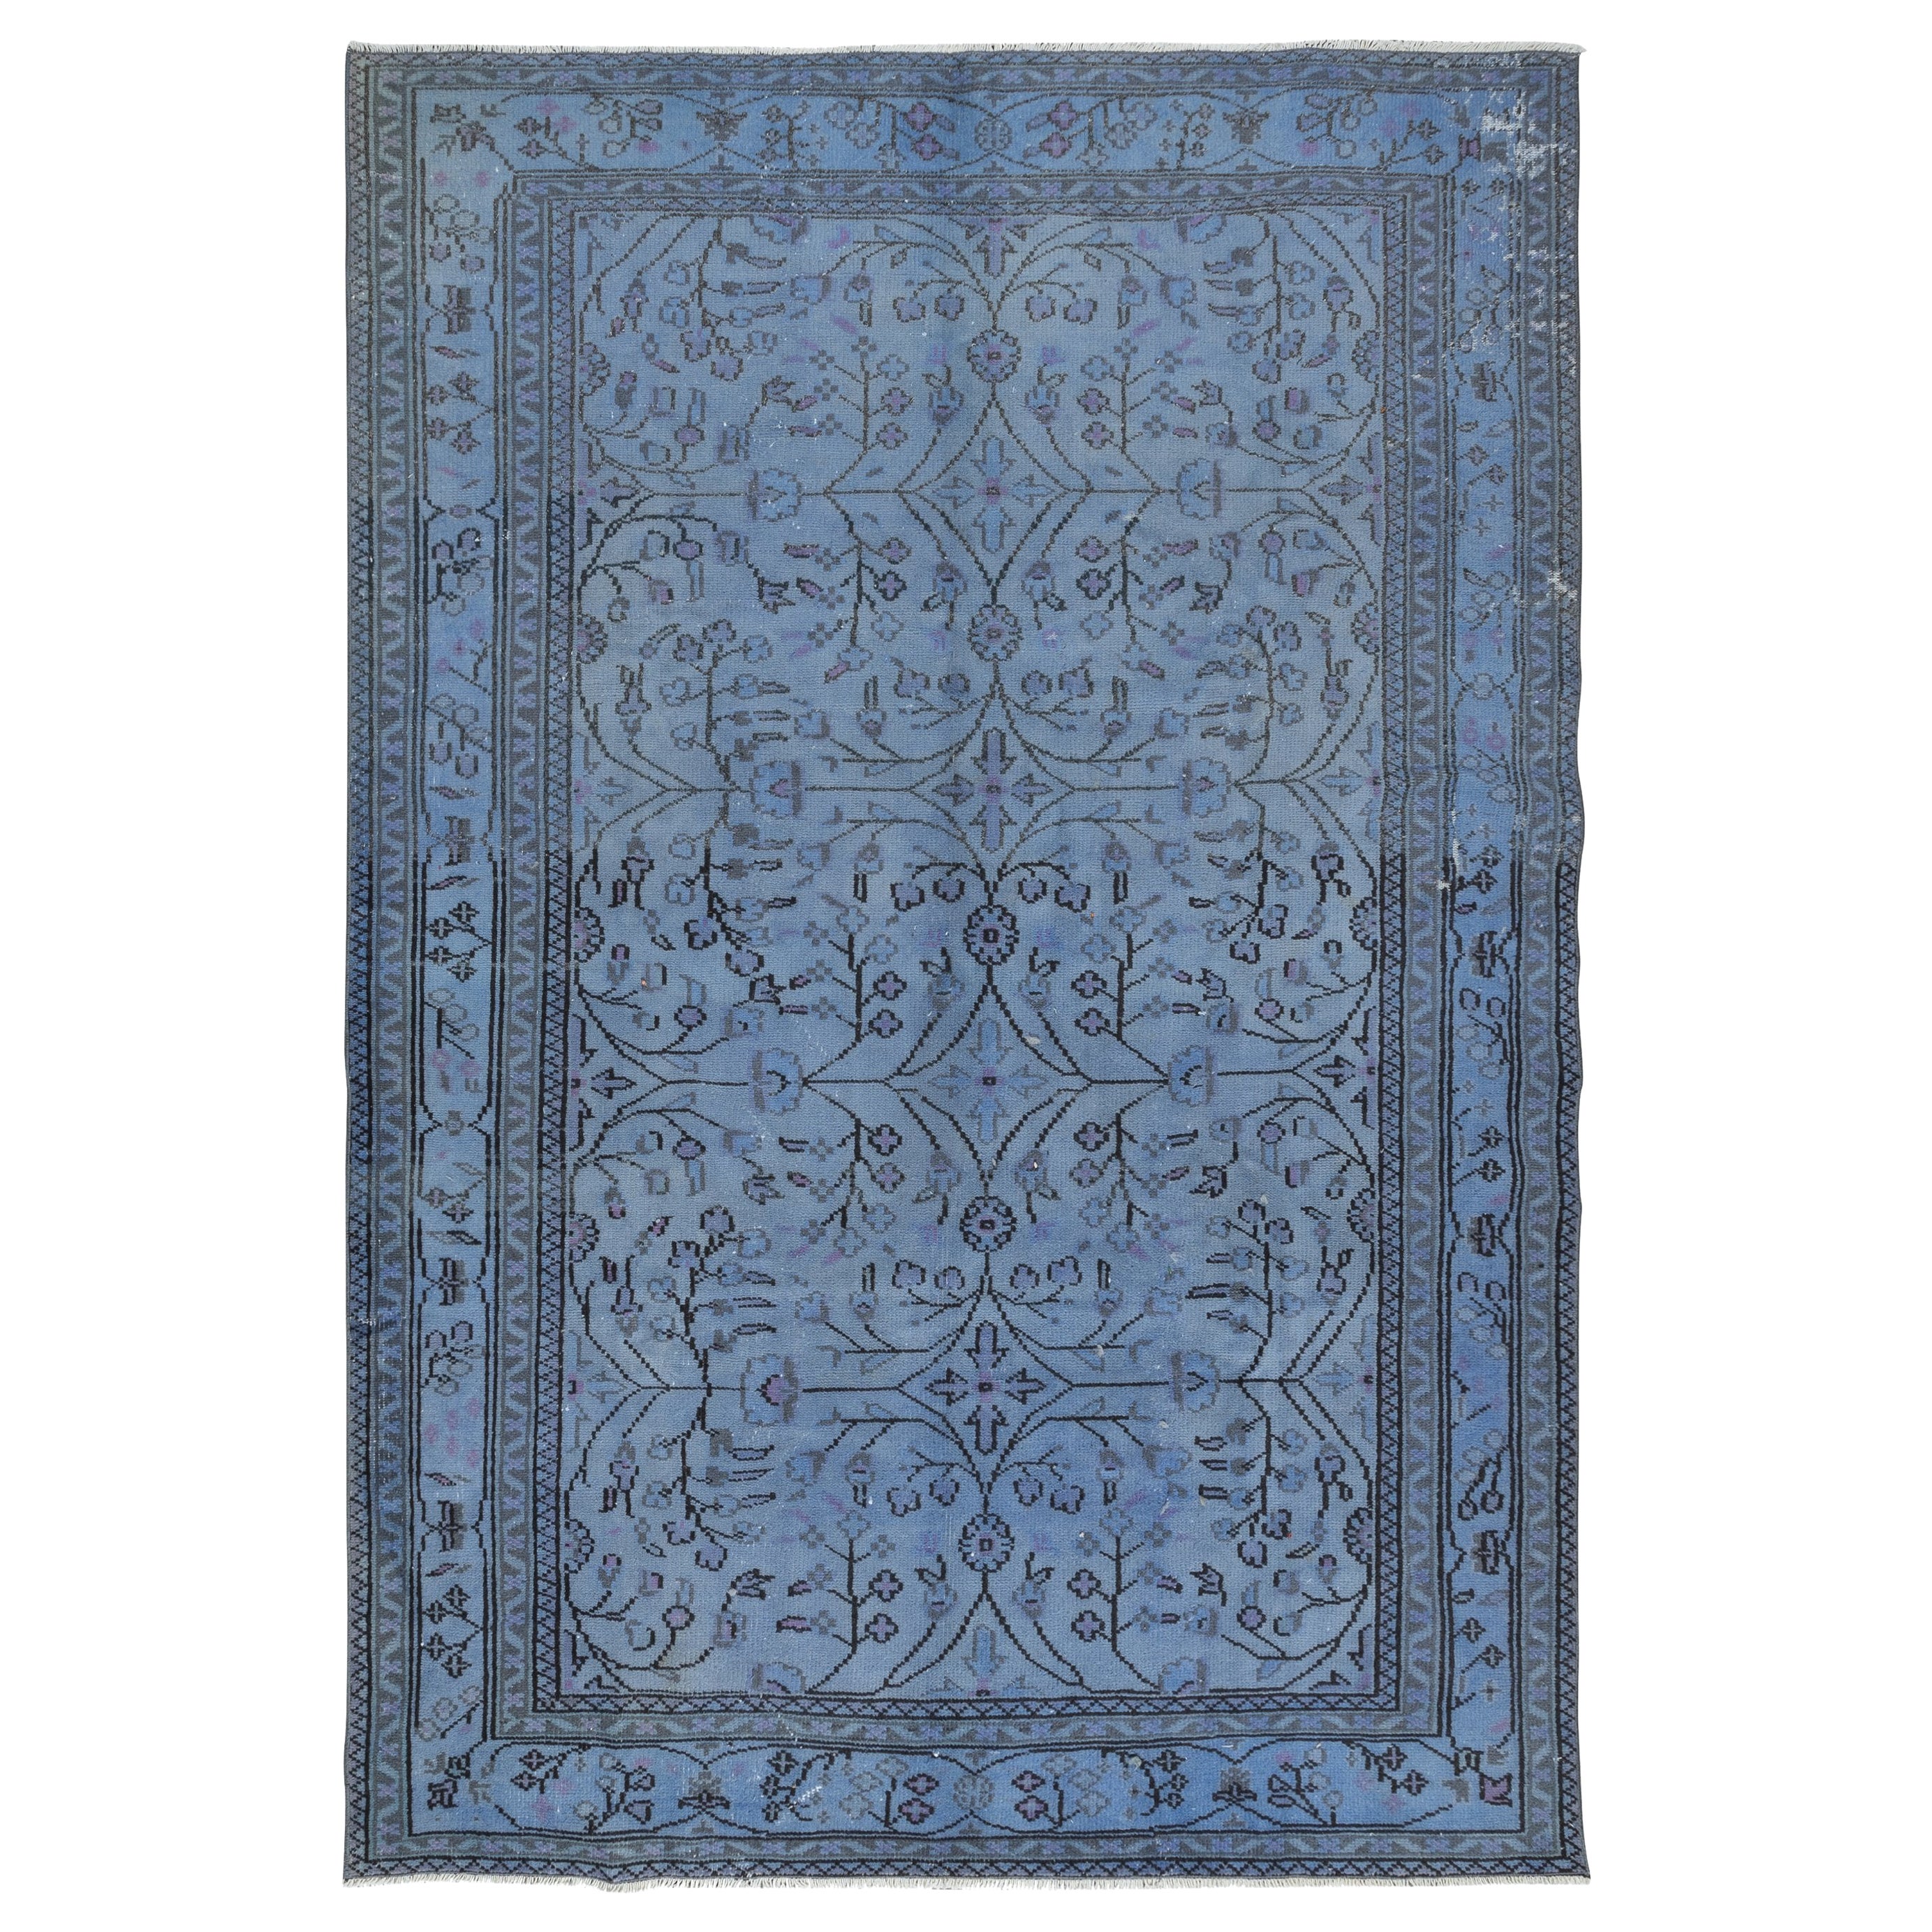 7x10 Ft Modern Handmade Rug Overdyed in Blue, One-of-a-kind Turkish Carpet (tapis turc unique en son genre)